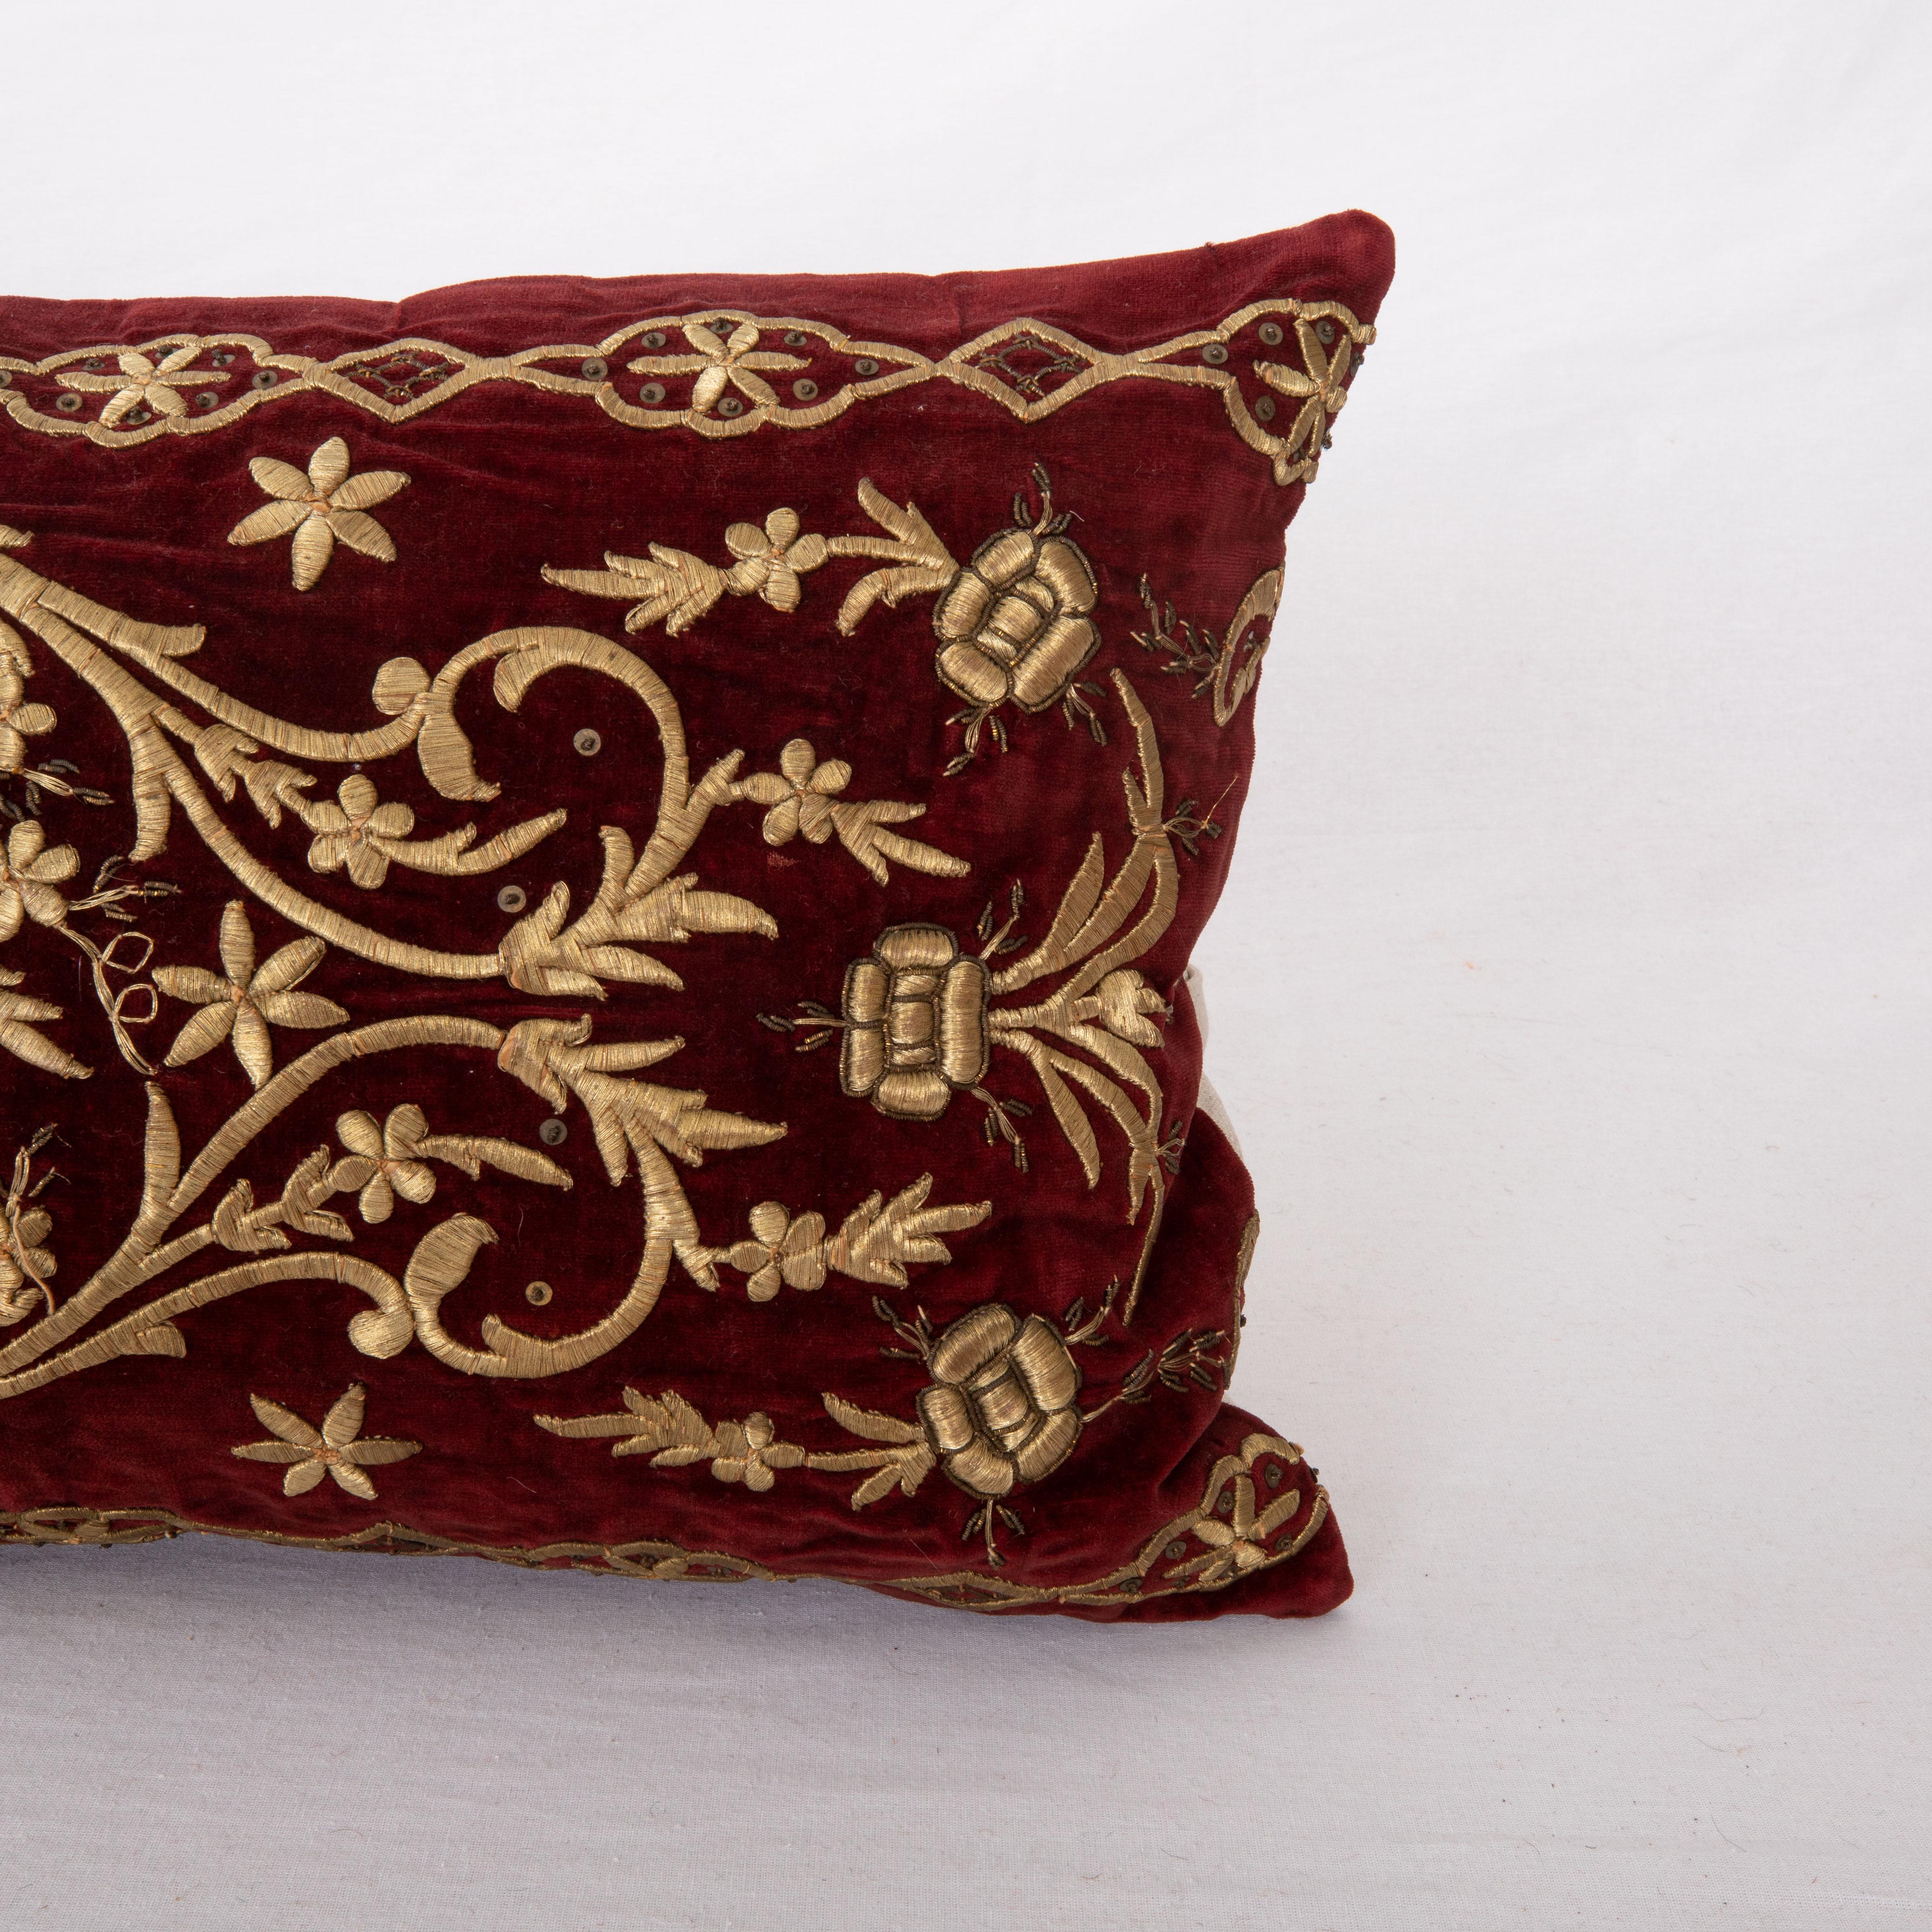 Embroidered Antique Silk Velvet Ottoman Sarma Pillow Cover, Late 19th Century